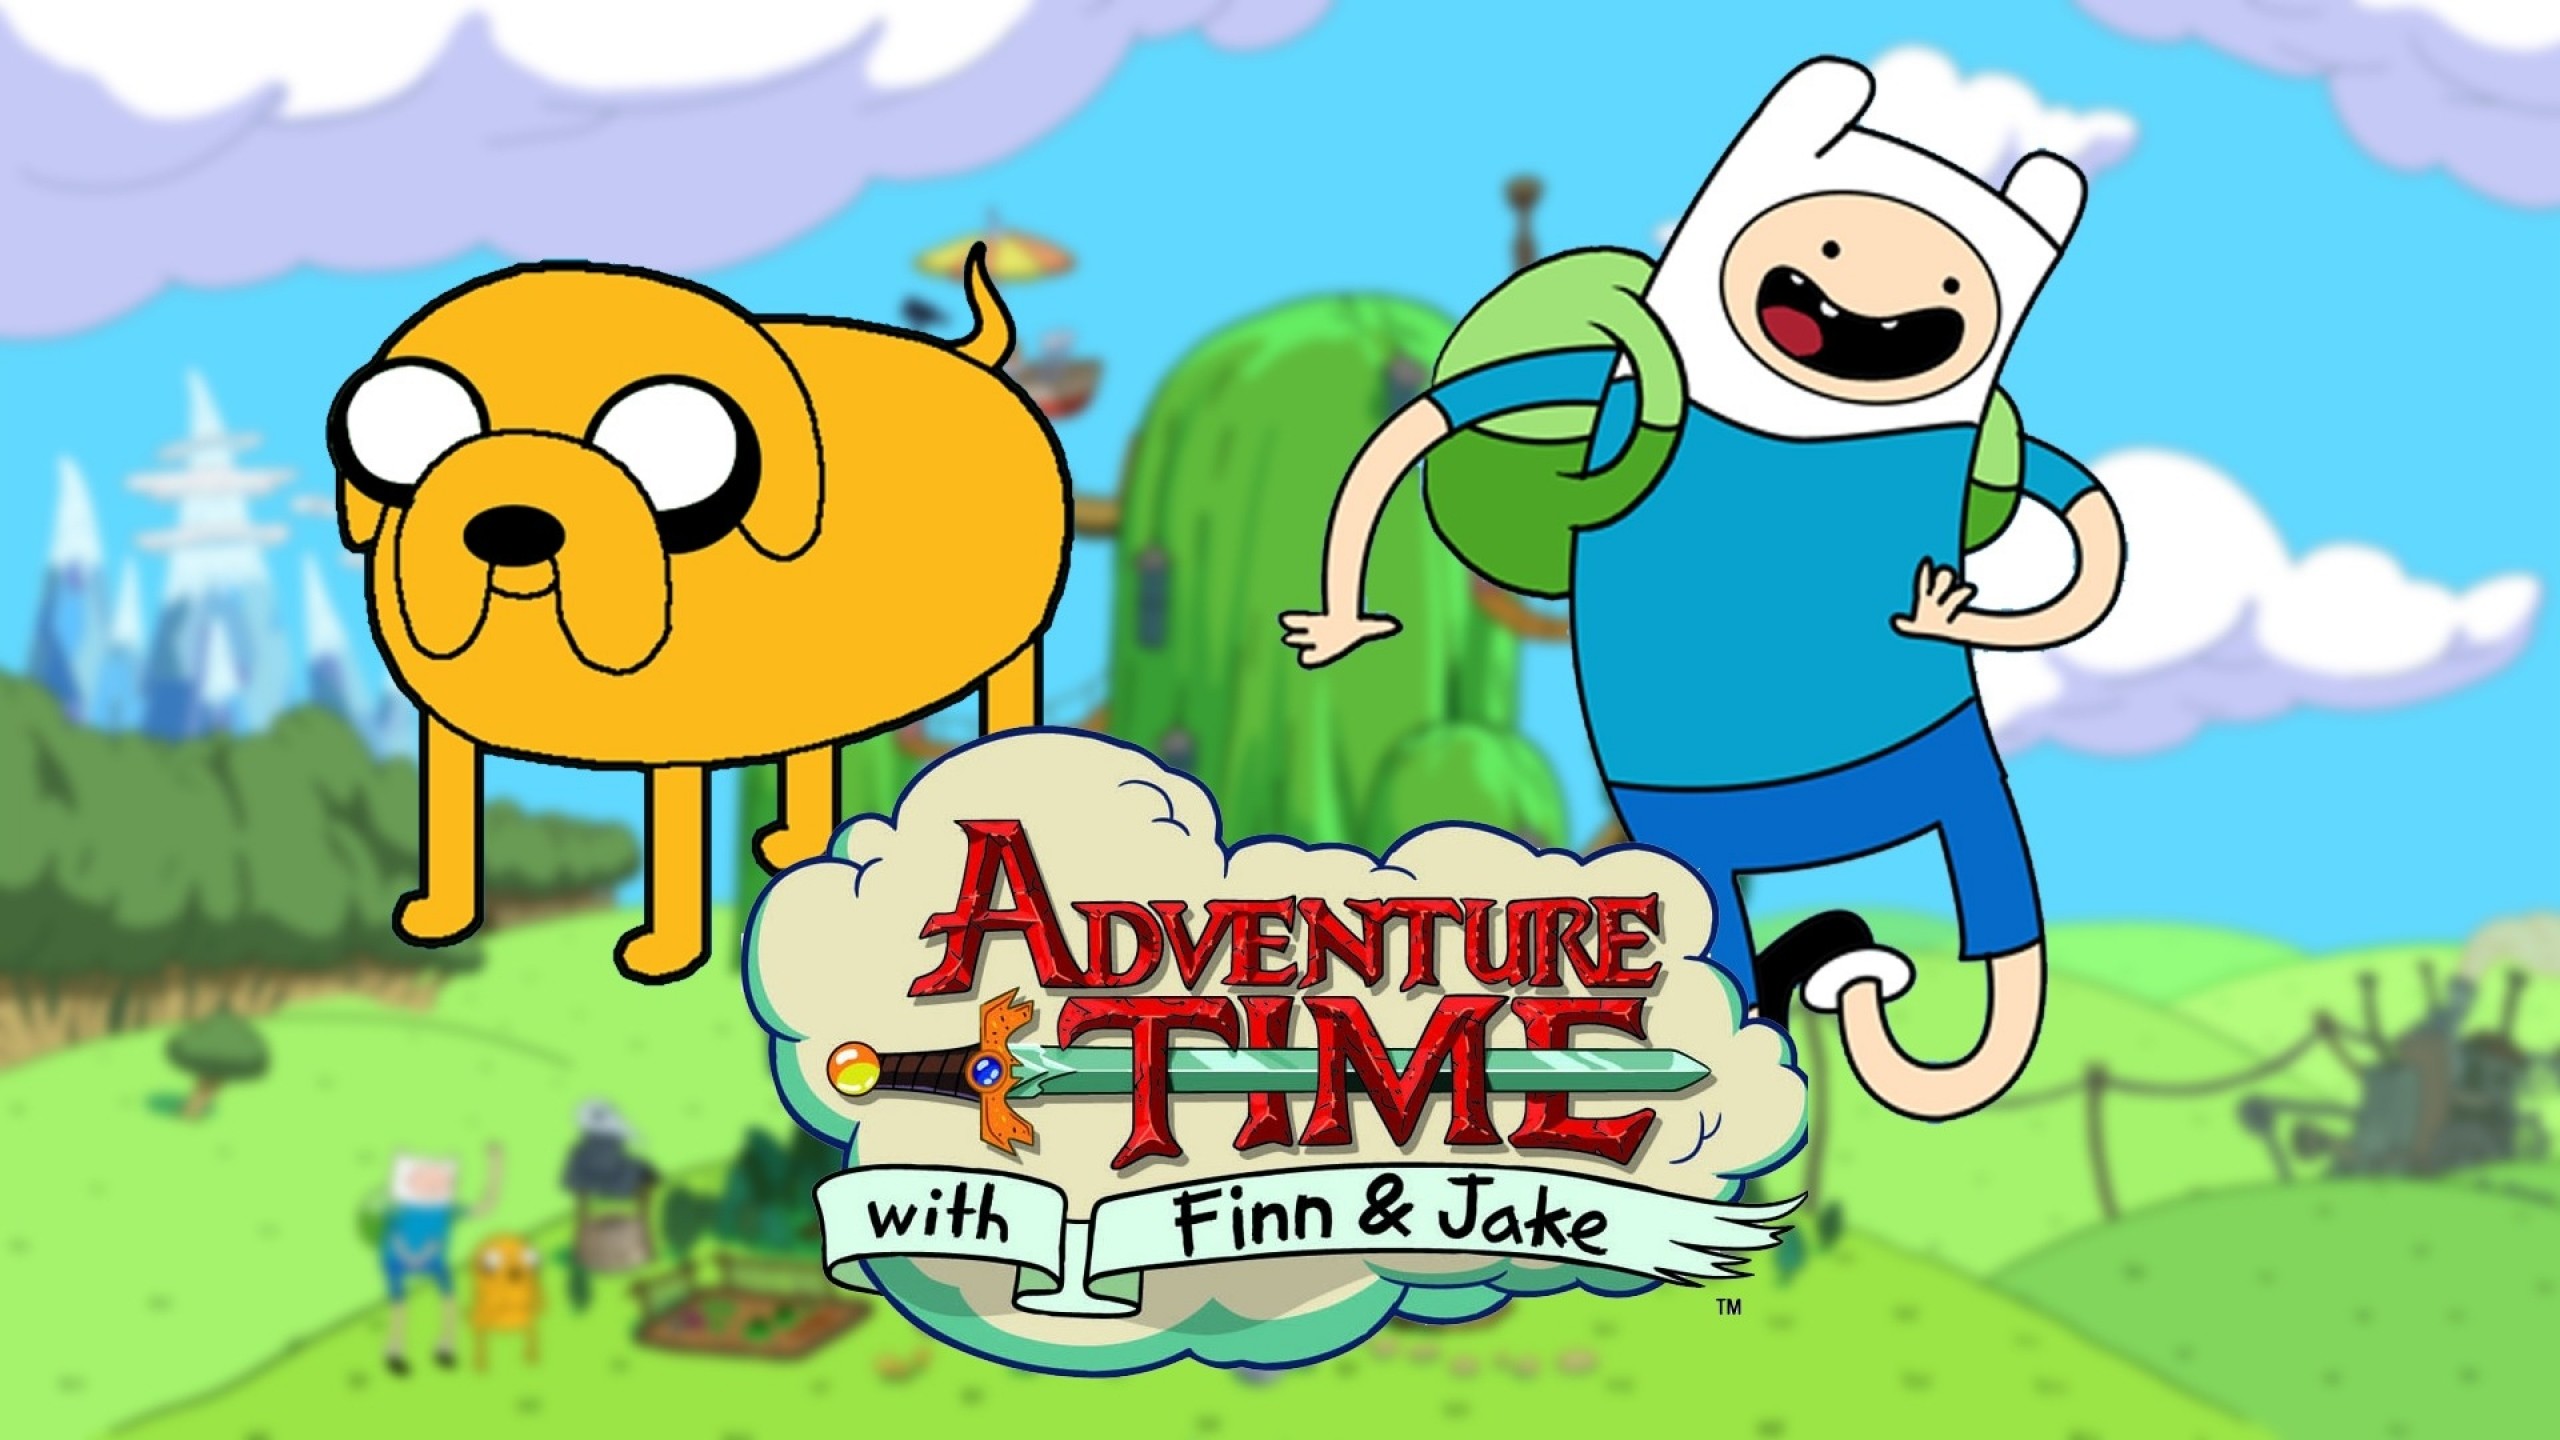 Adventure ютуб. Фин и Джейк. Adventure time Джейк. Финн адвентуре тайм. Финн и Джейк время приключений.